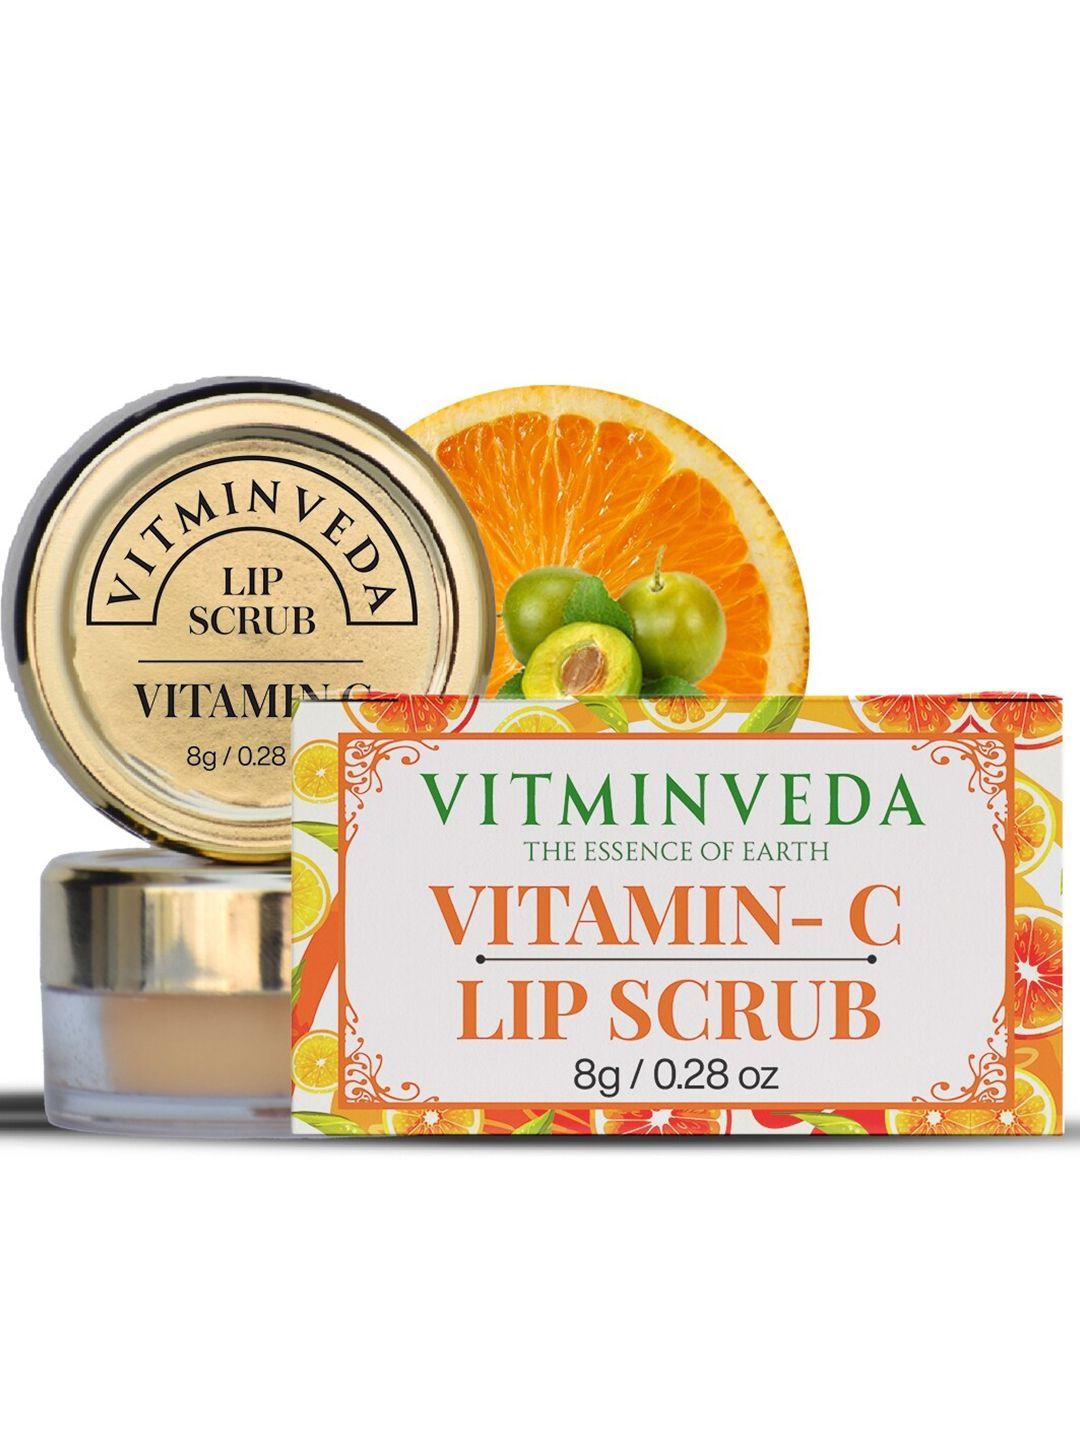 vitminveda vitamin c lip scrub for dry lips - 8 g